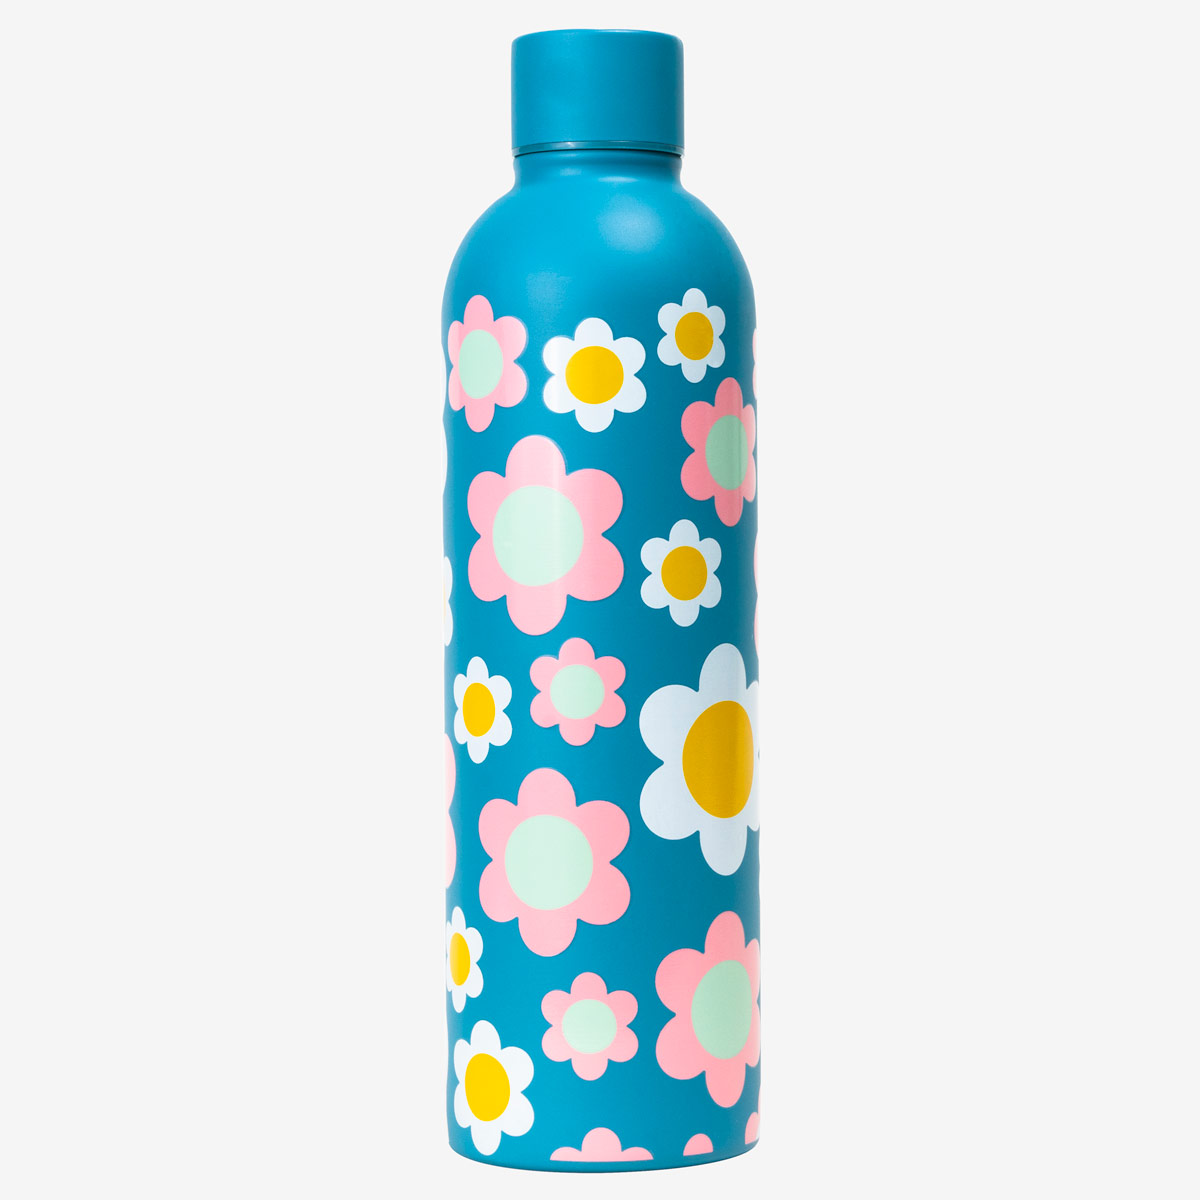 Hard Rock Music Festival Flower Power Water Bottle in Blue image number 3